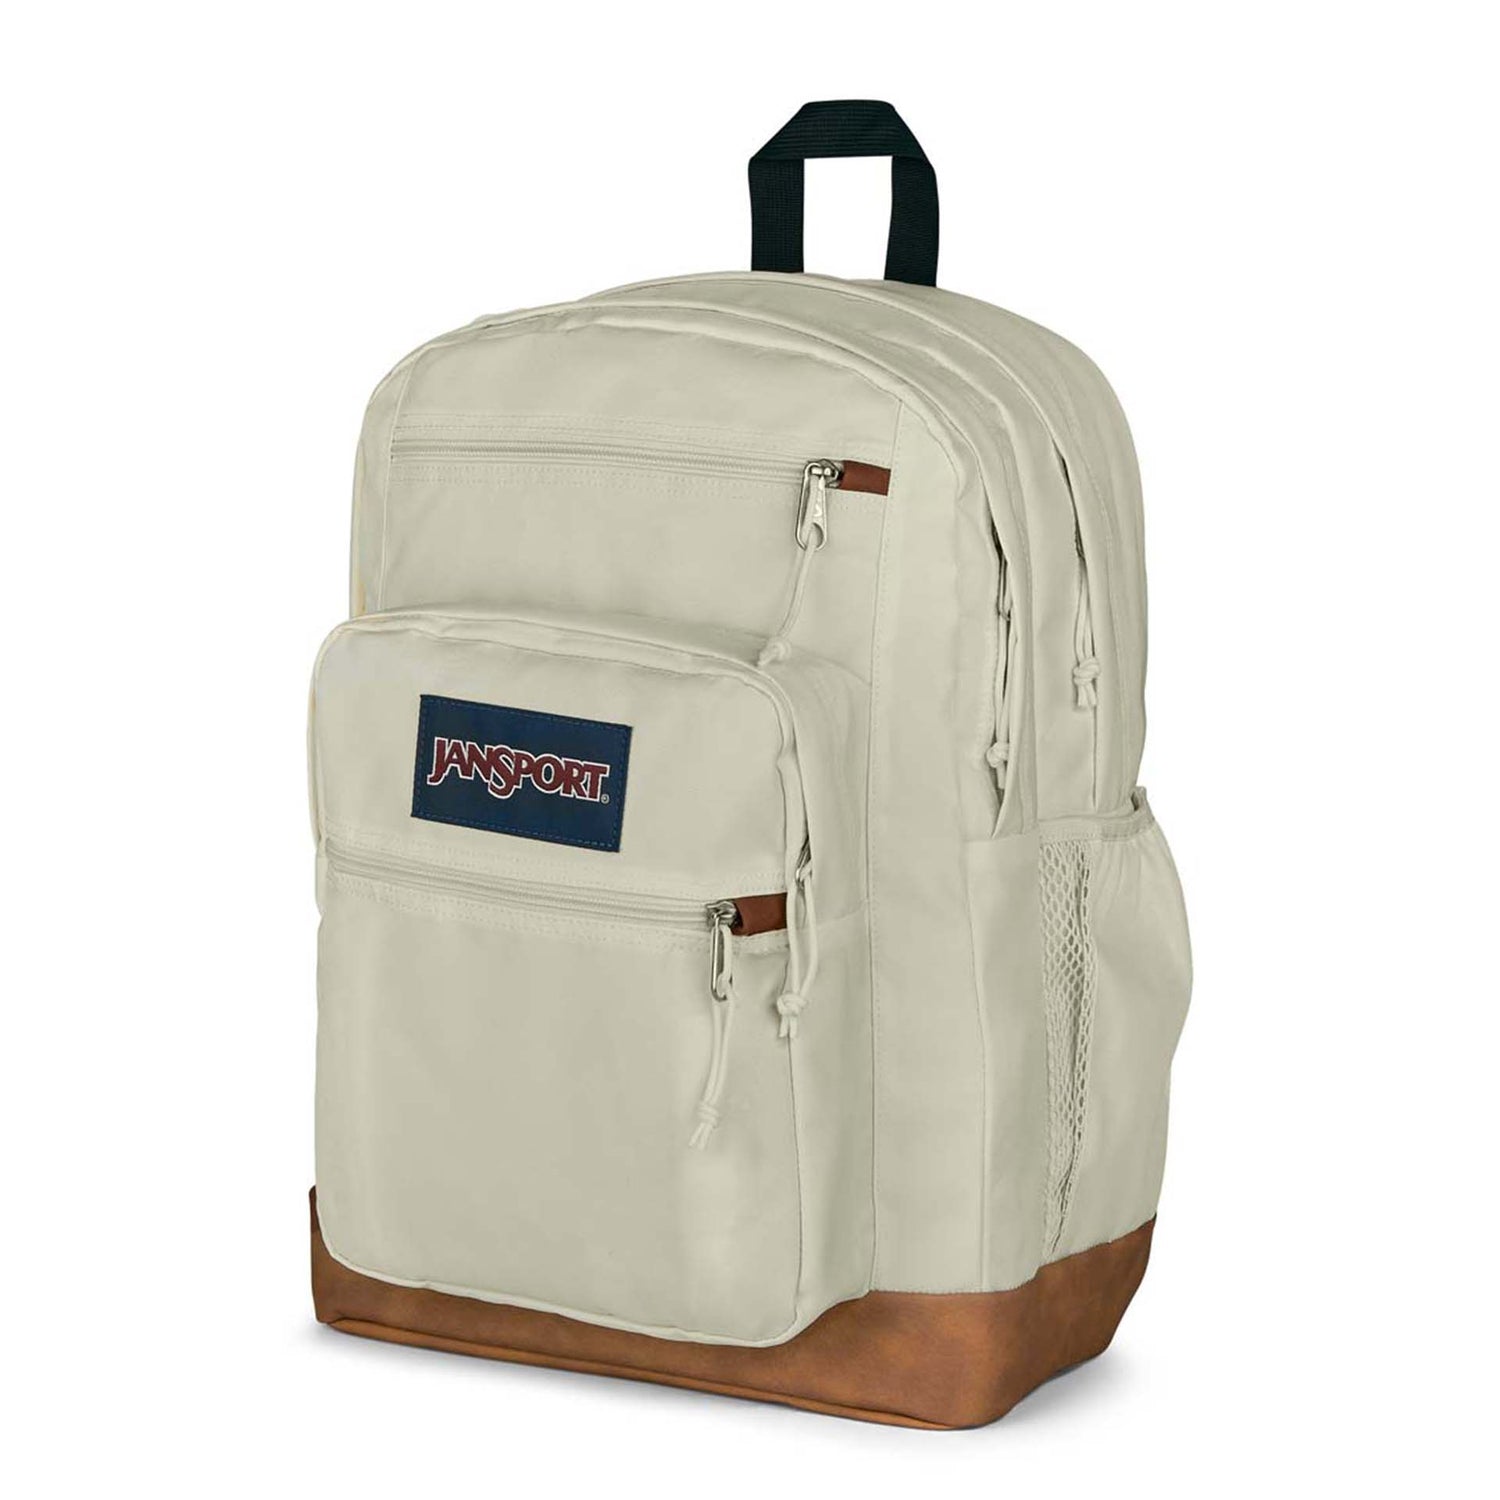 Cool Student Backpack - Bentley